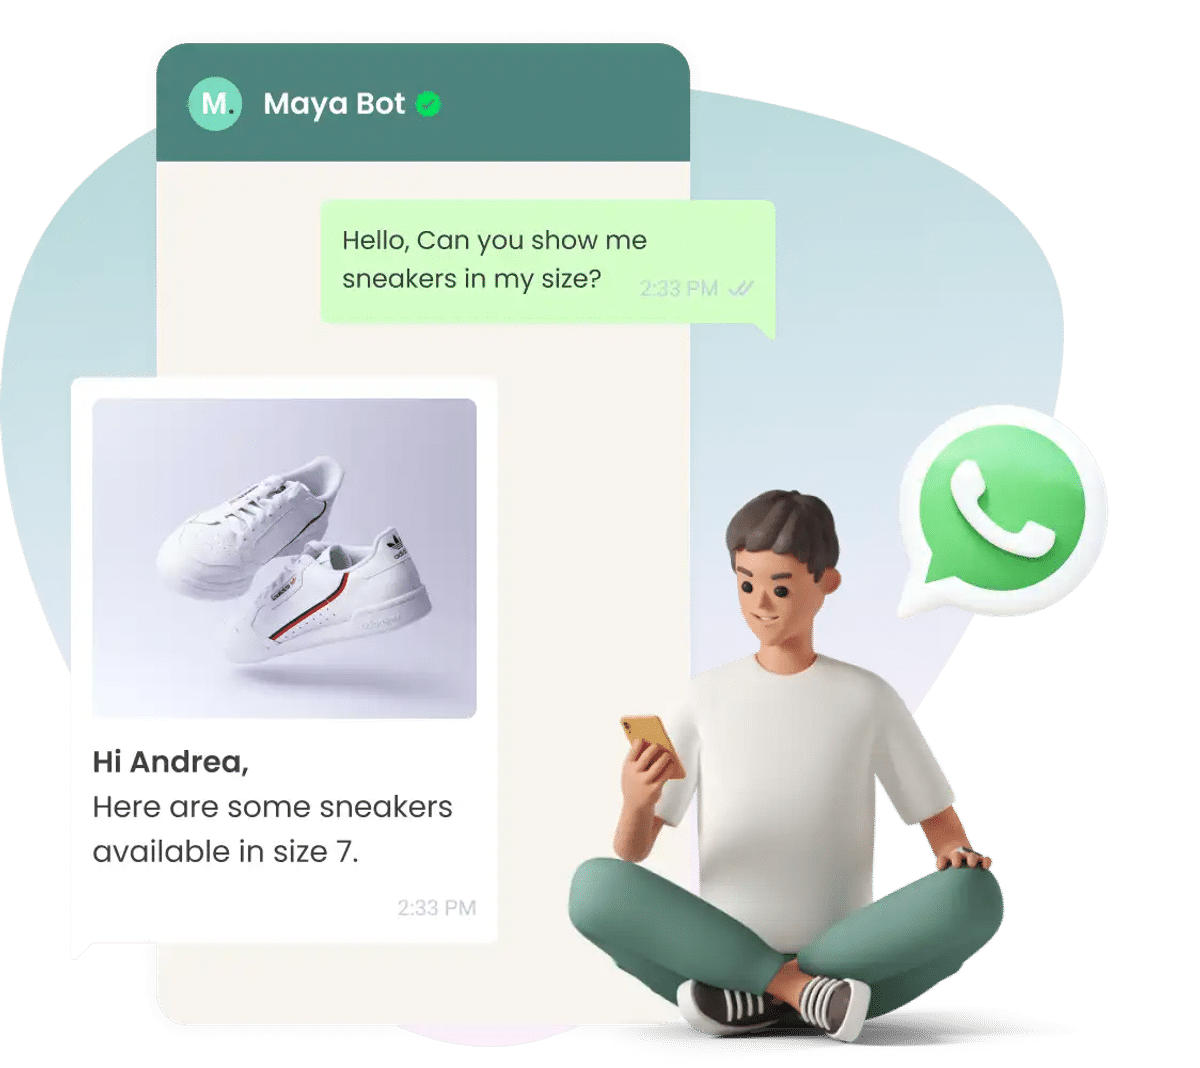 WhatsApp business API